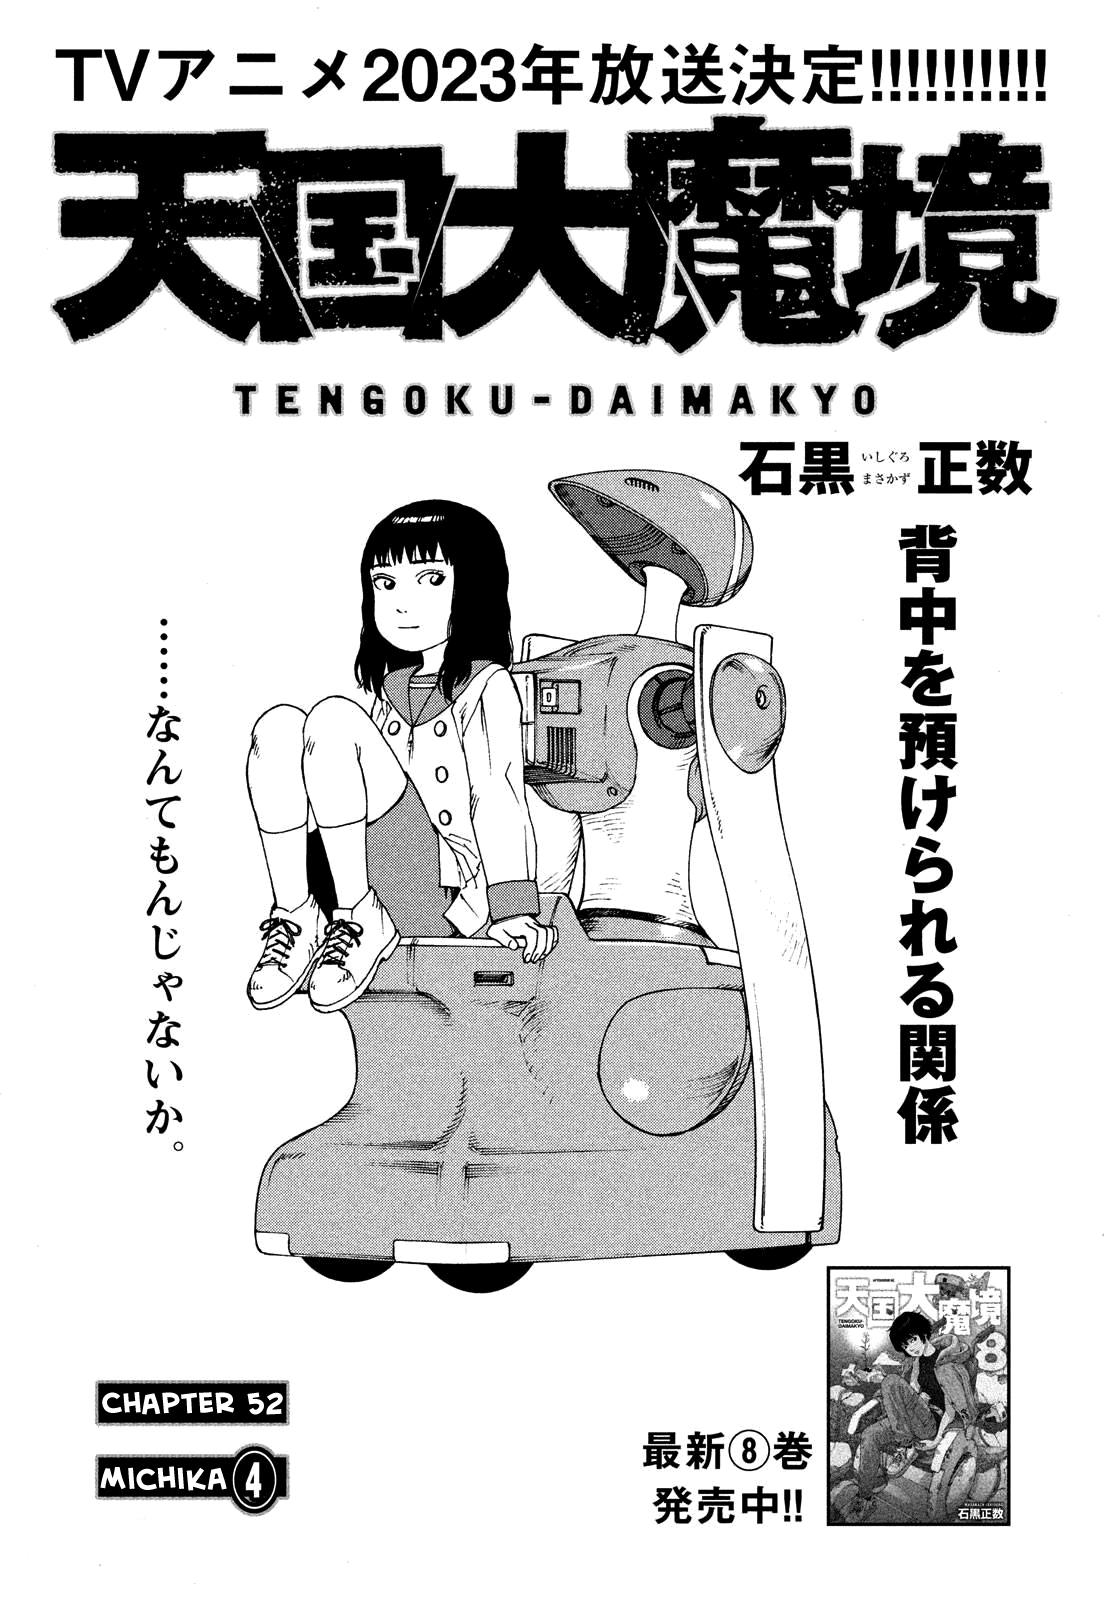 Read Tengoku Daimakyou Vol.9 Chapter 51: Michika ➂ - Manganelo